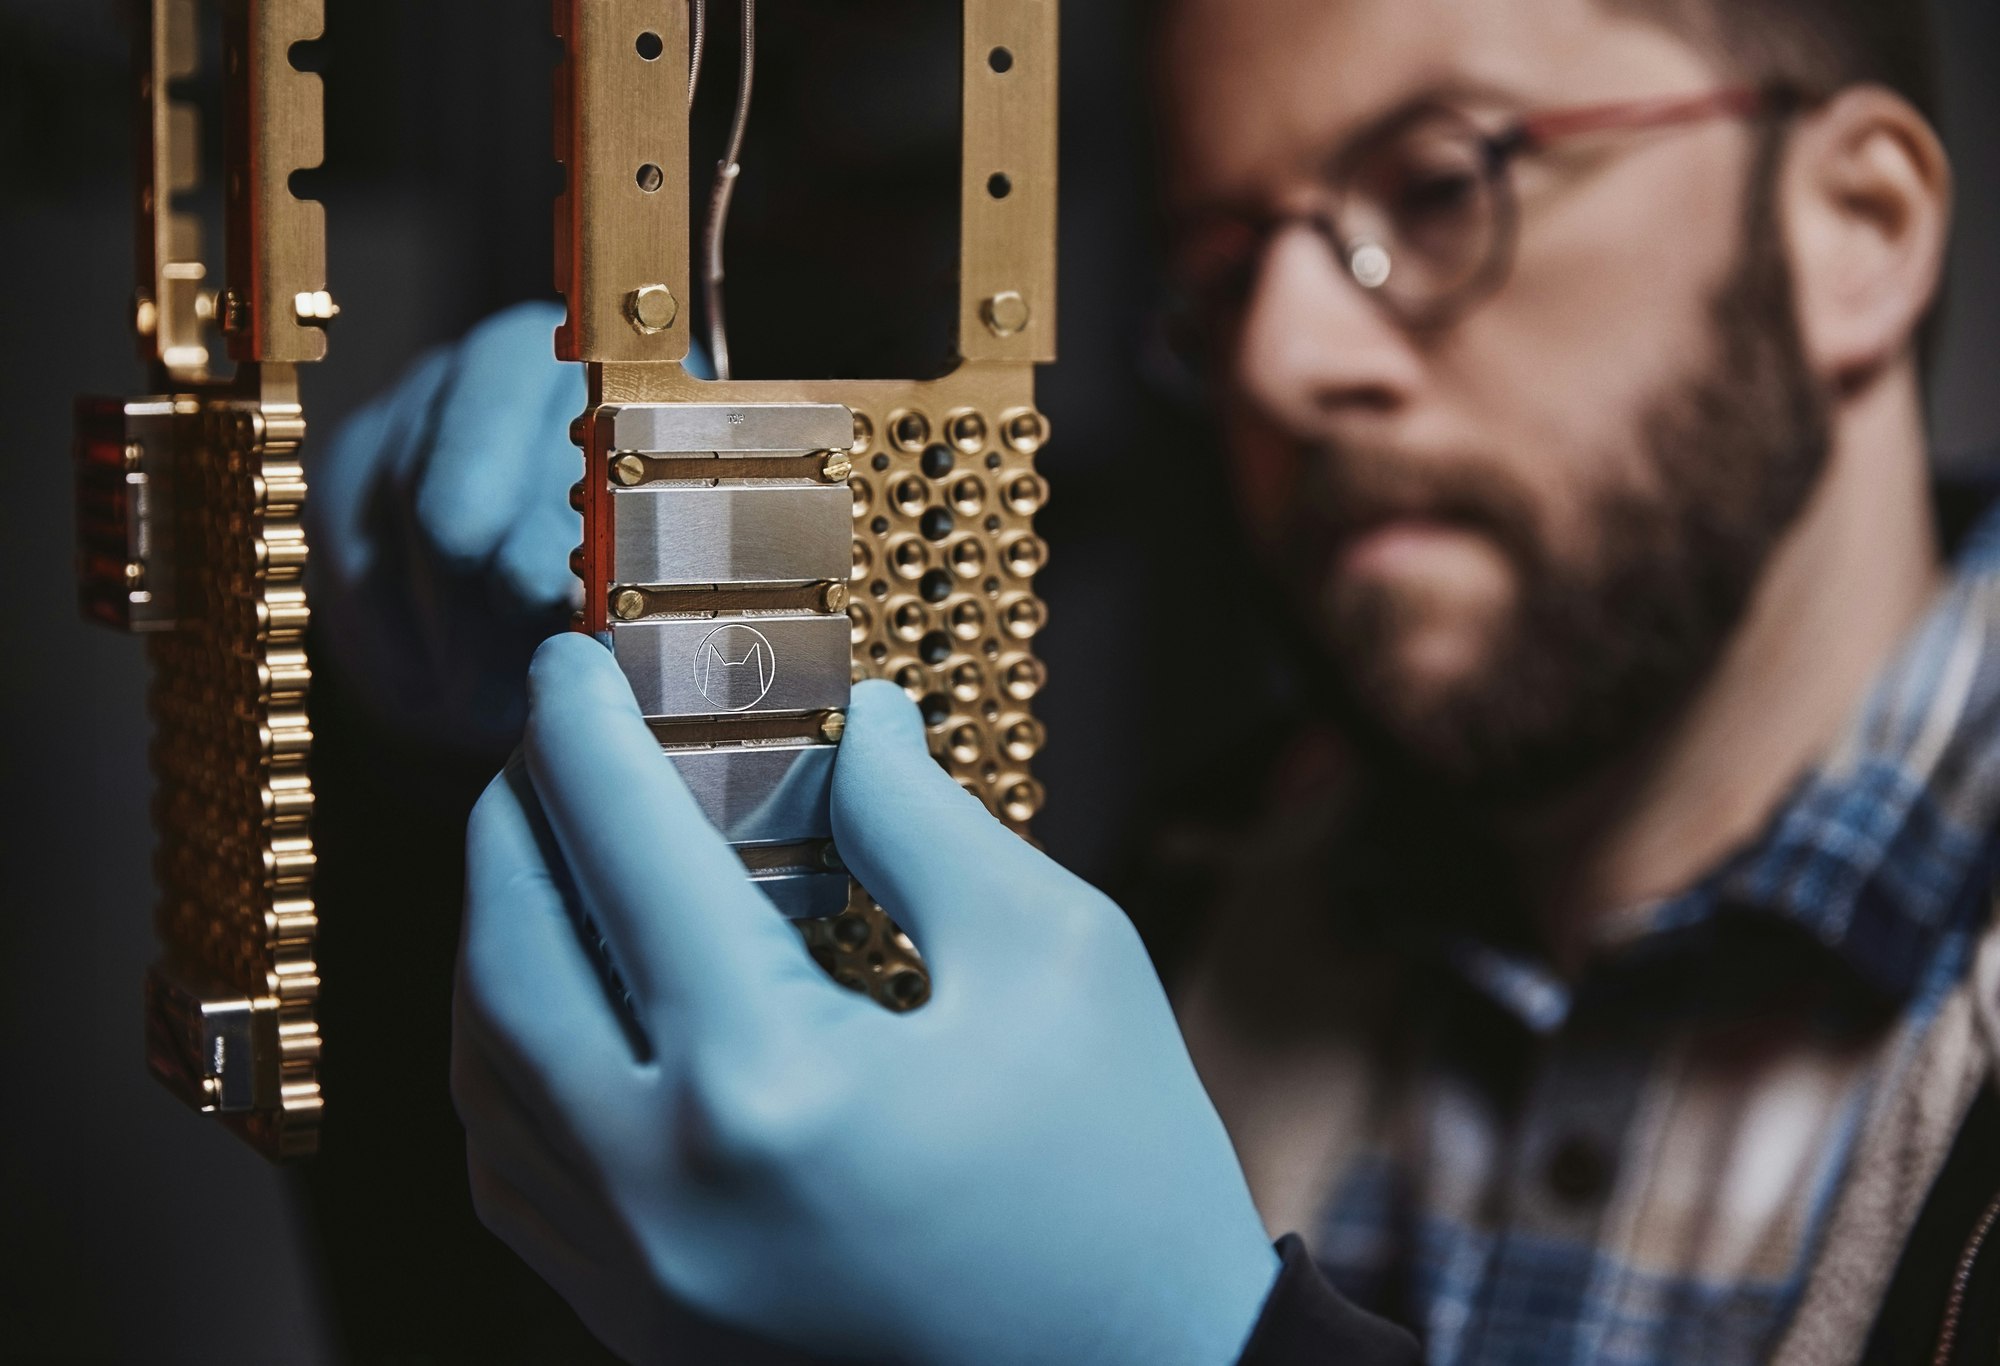 A picture of a man manipulating Alice & Bob's quantum computer